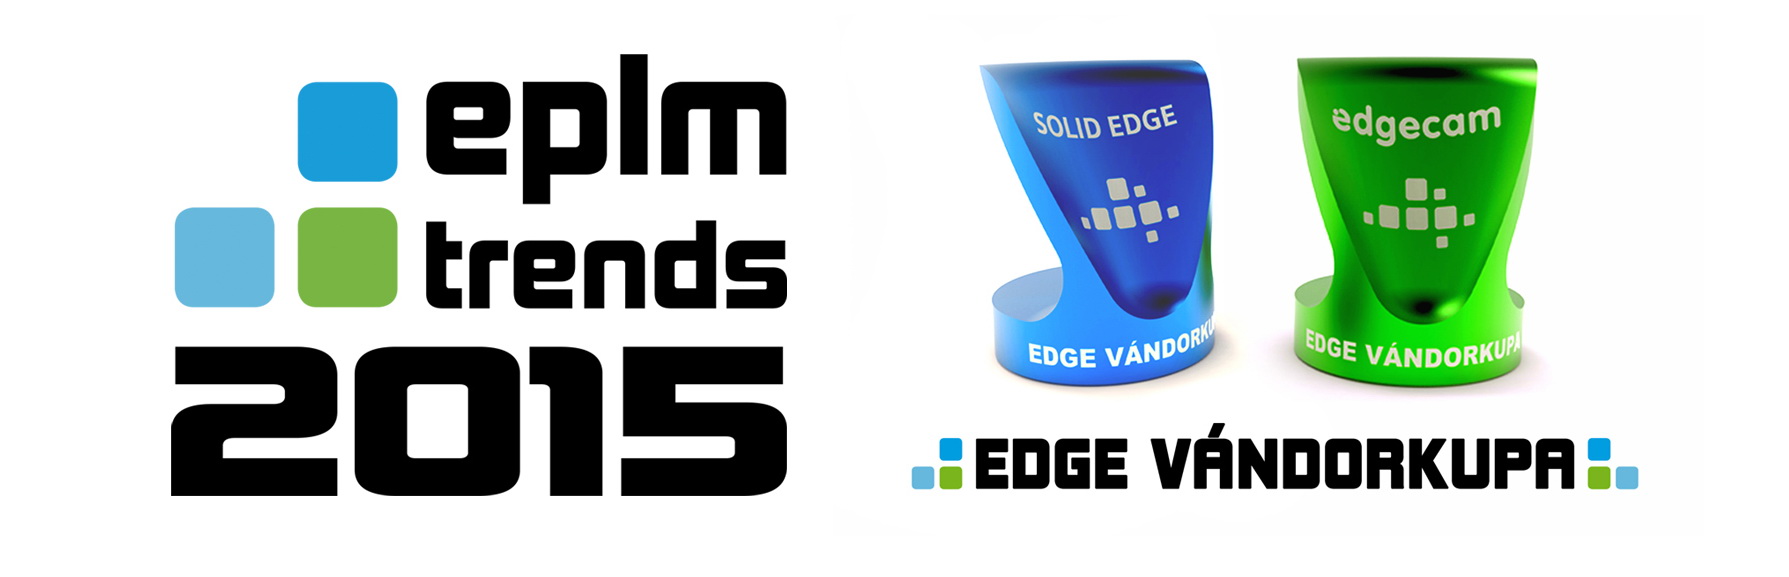 EDGE Vándorkupa 2015 – Enterprise PLM szakmai díj